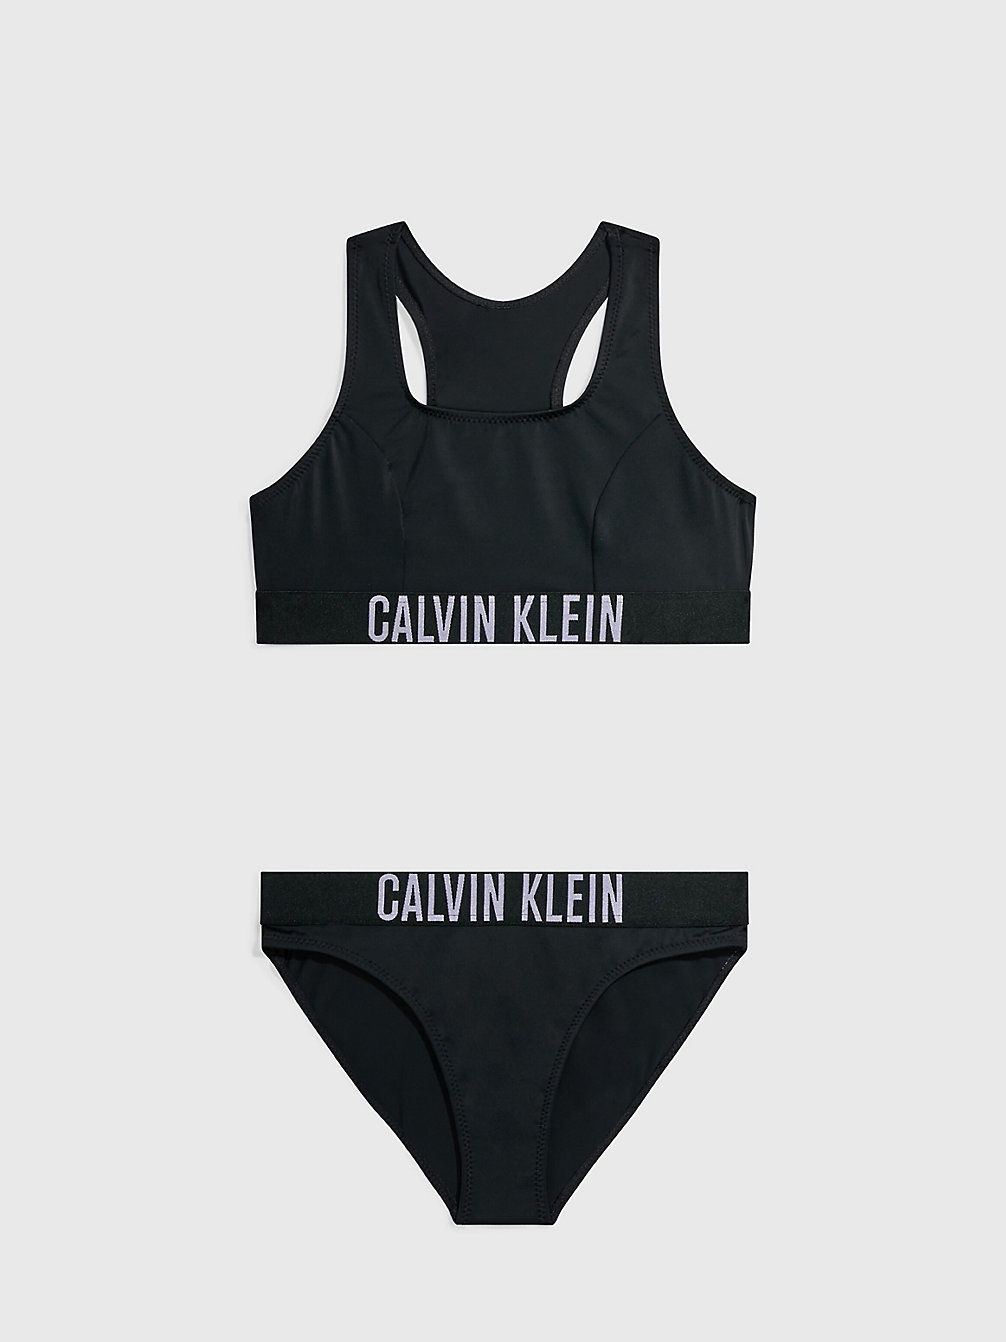 PVH BLACK > Meisjesbralette Bikini - Intense Power > undefined girls - Calvin Klein